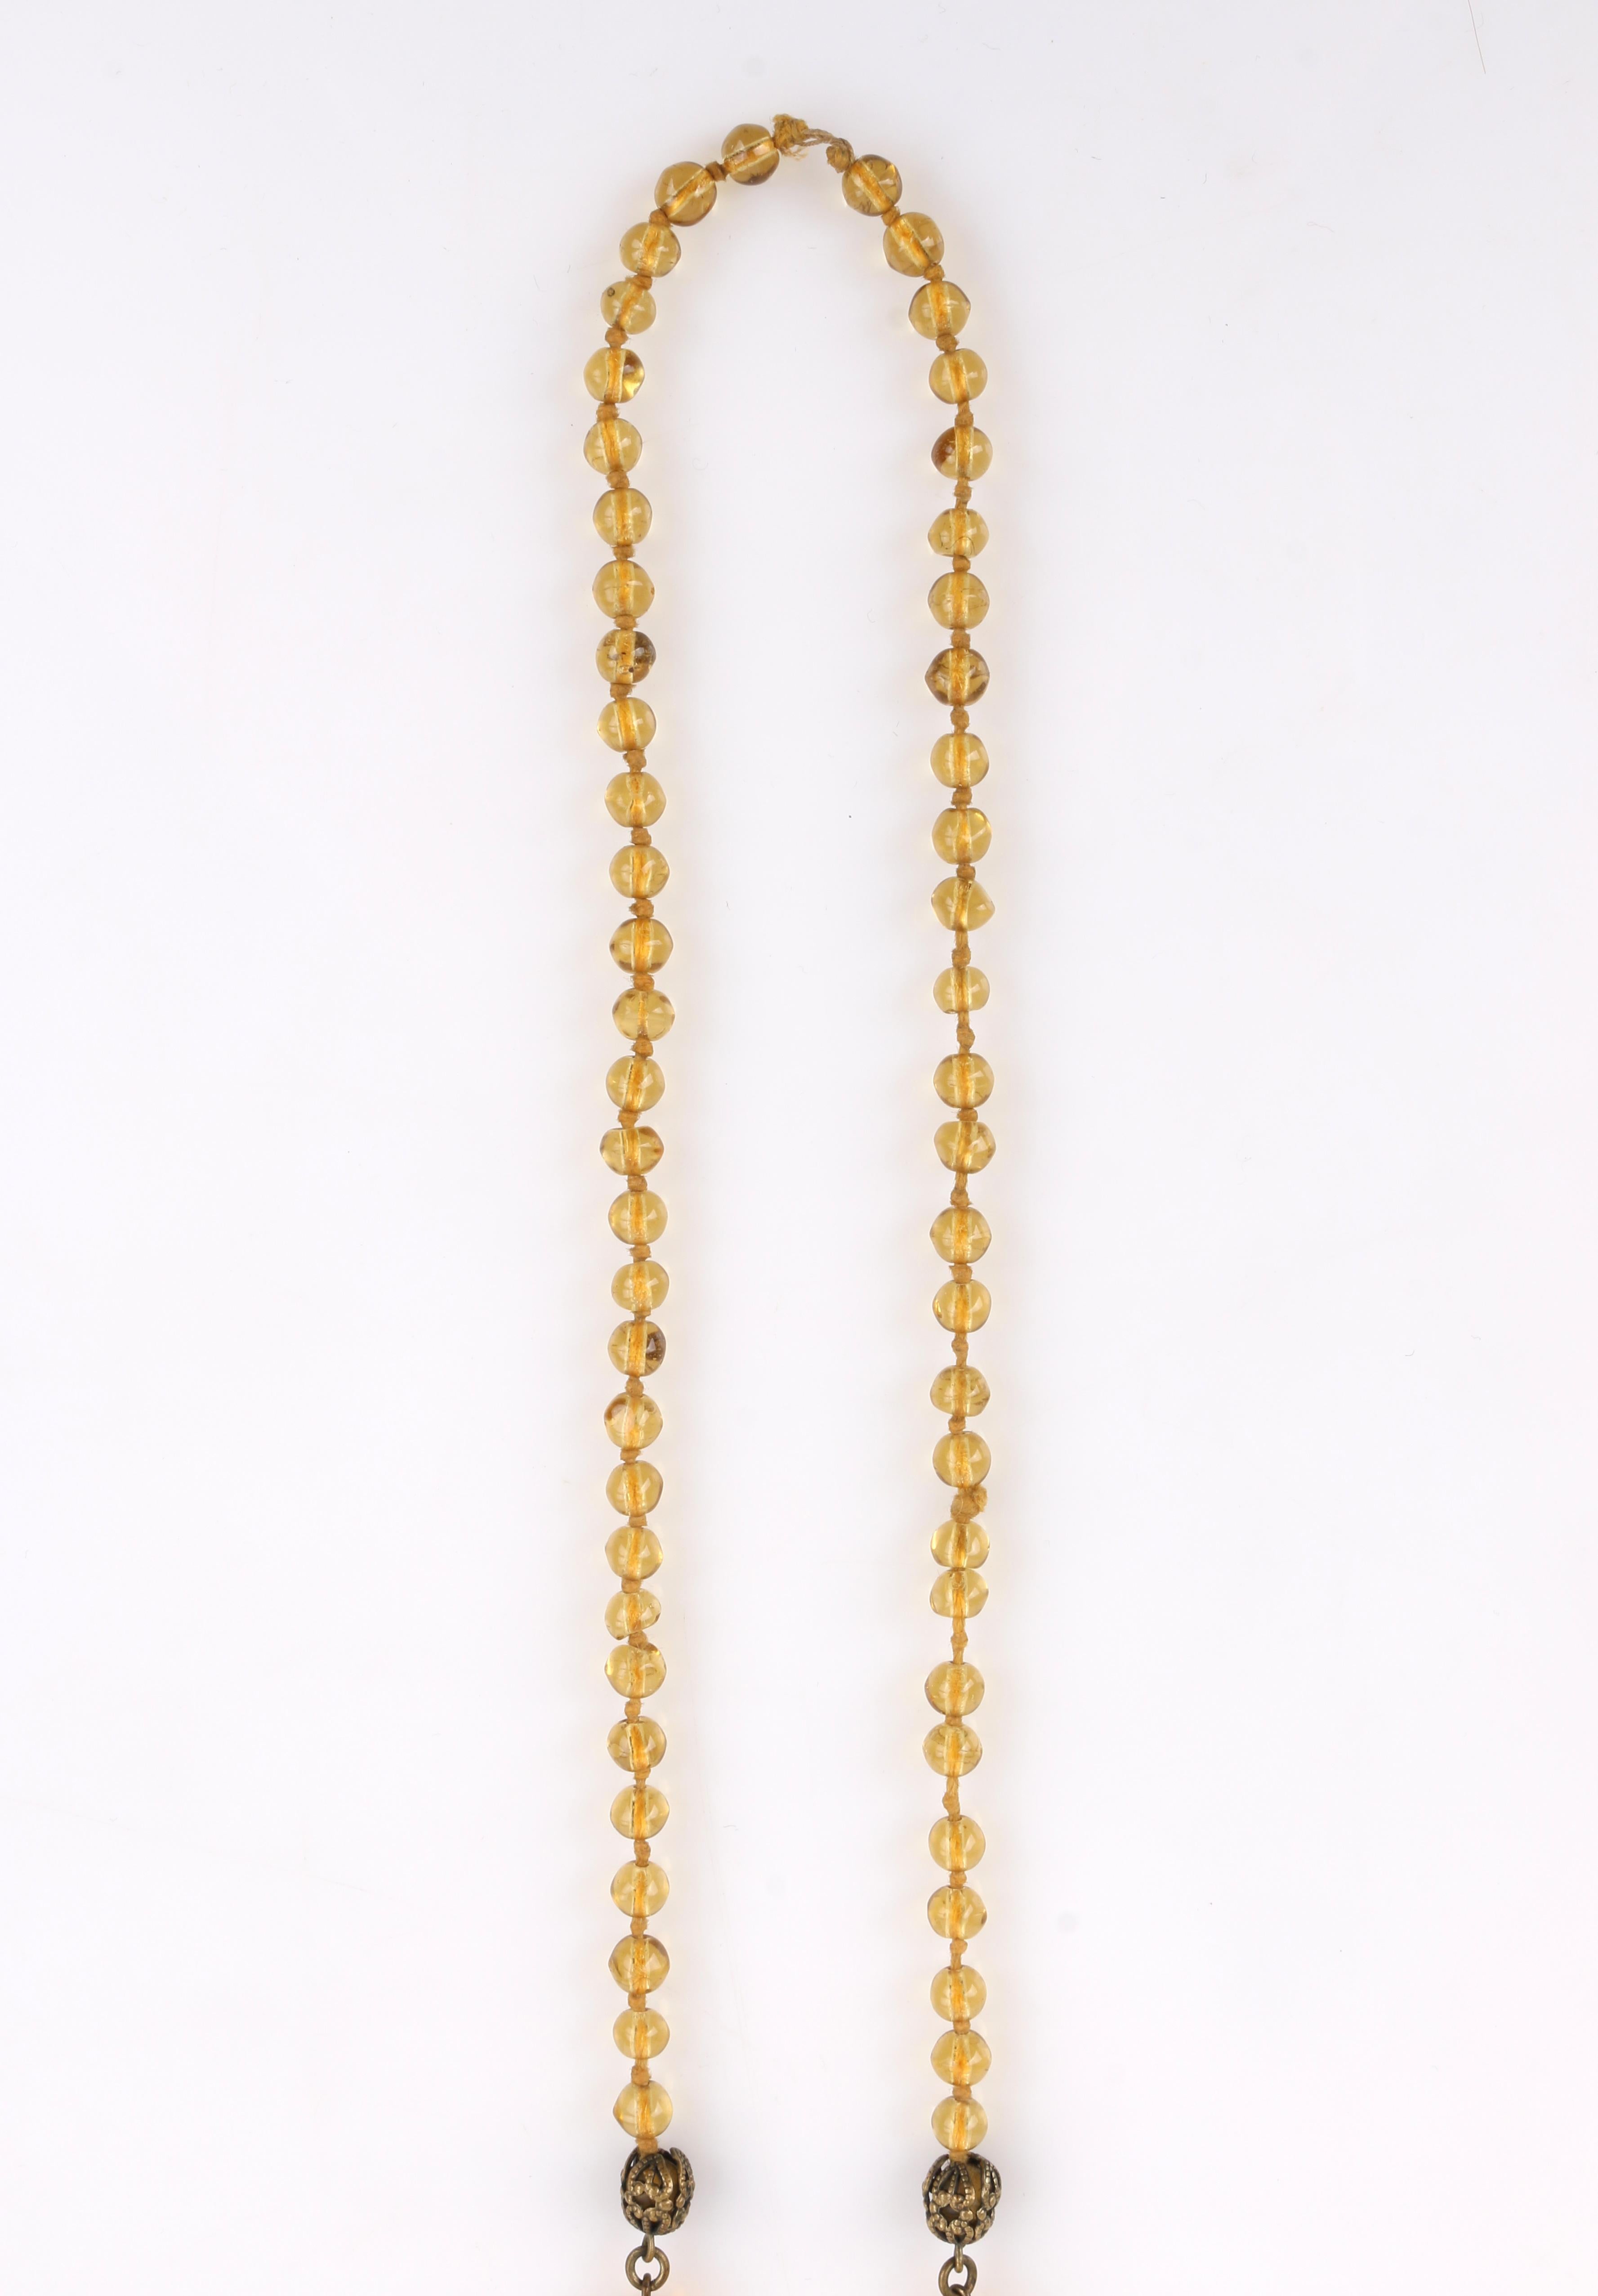 Details about   Vintage Amber Brown Lampwork Art Glass Bead Necklace SE20BN03 